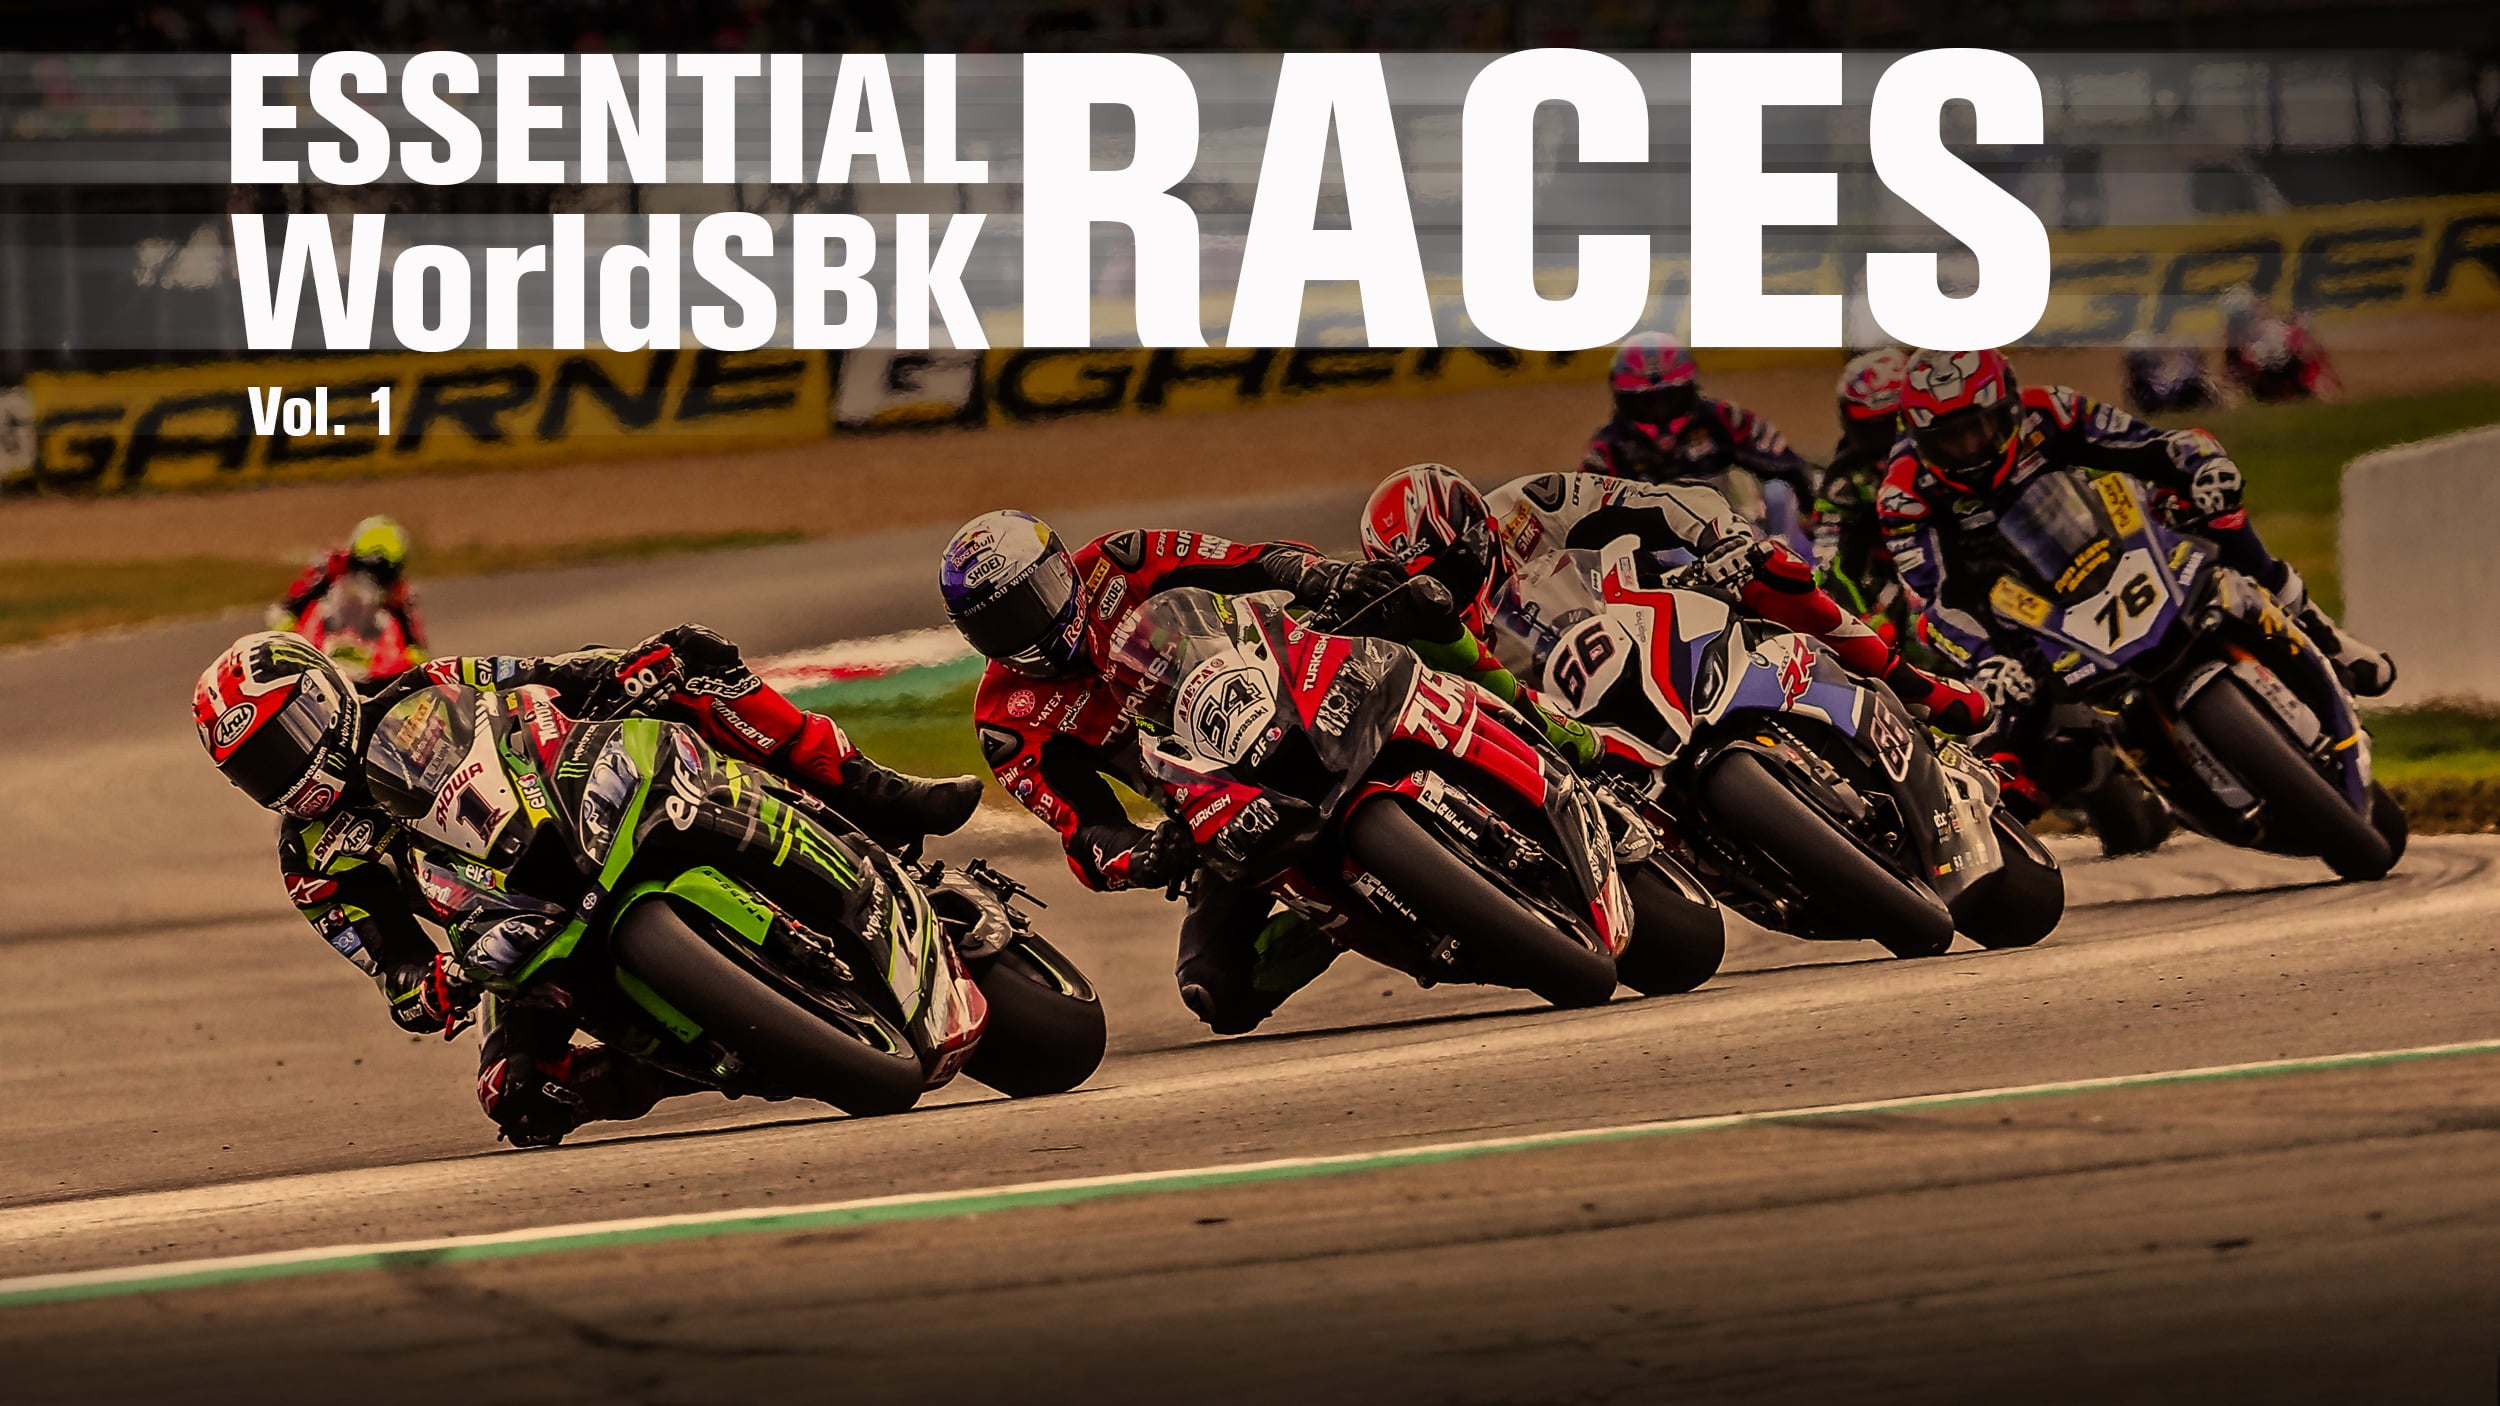 Free MotoGP, World Superbike race streaming now online